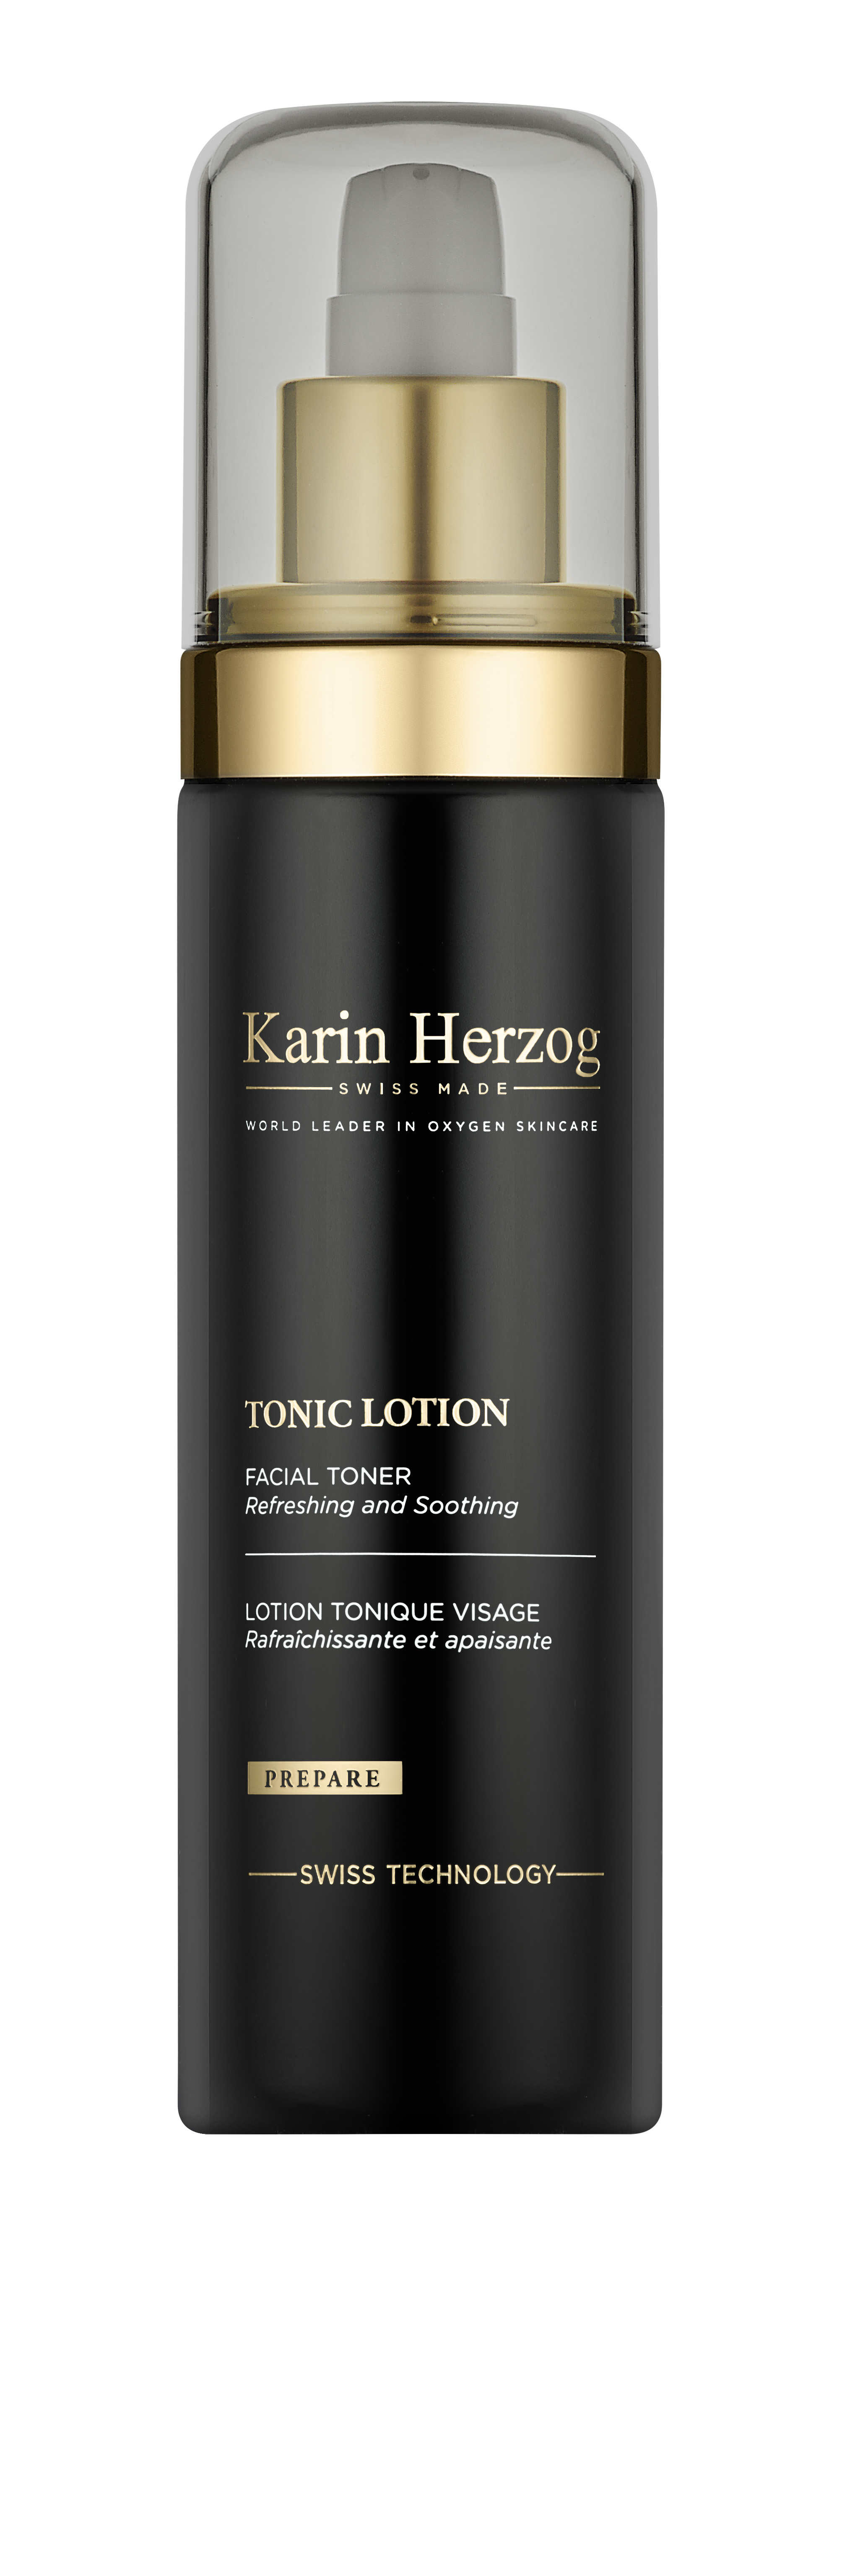 Karin Herzog Tonic Lotion 200ml